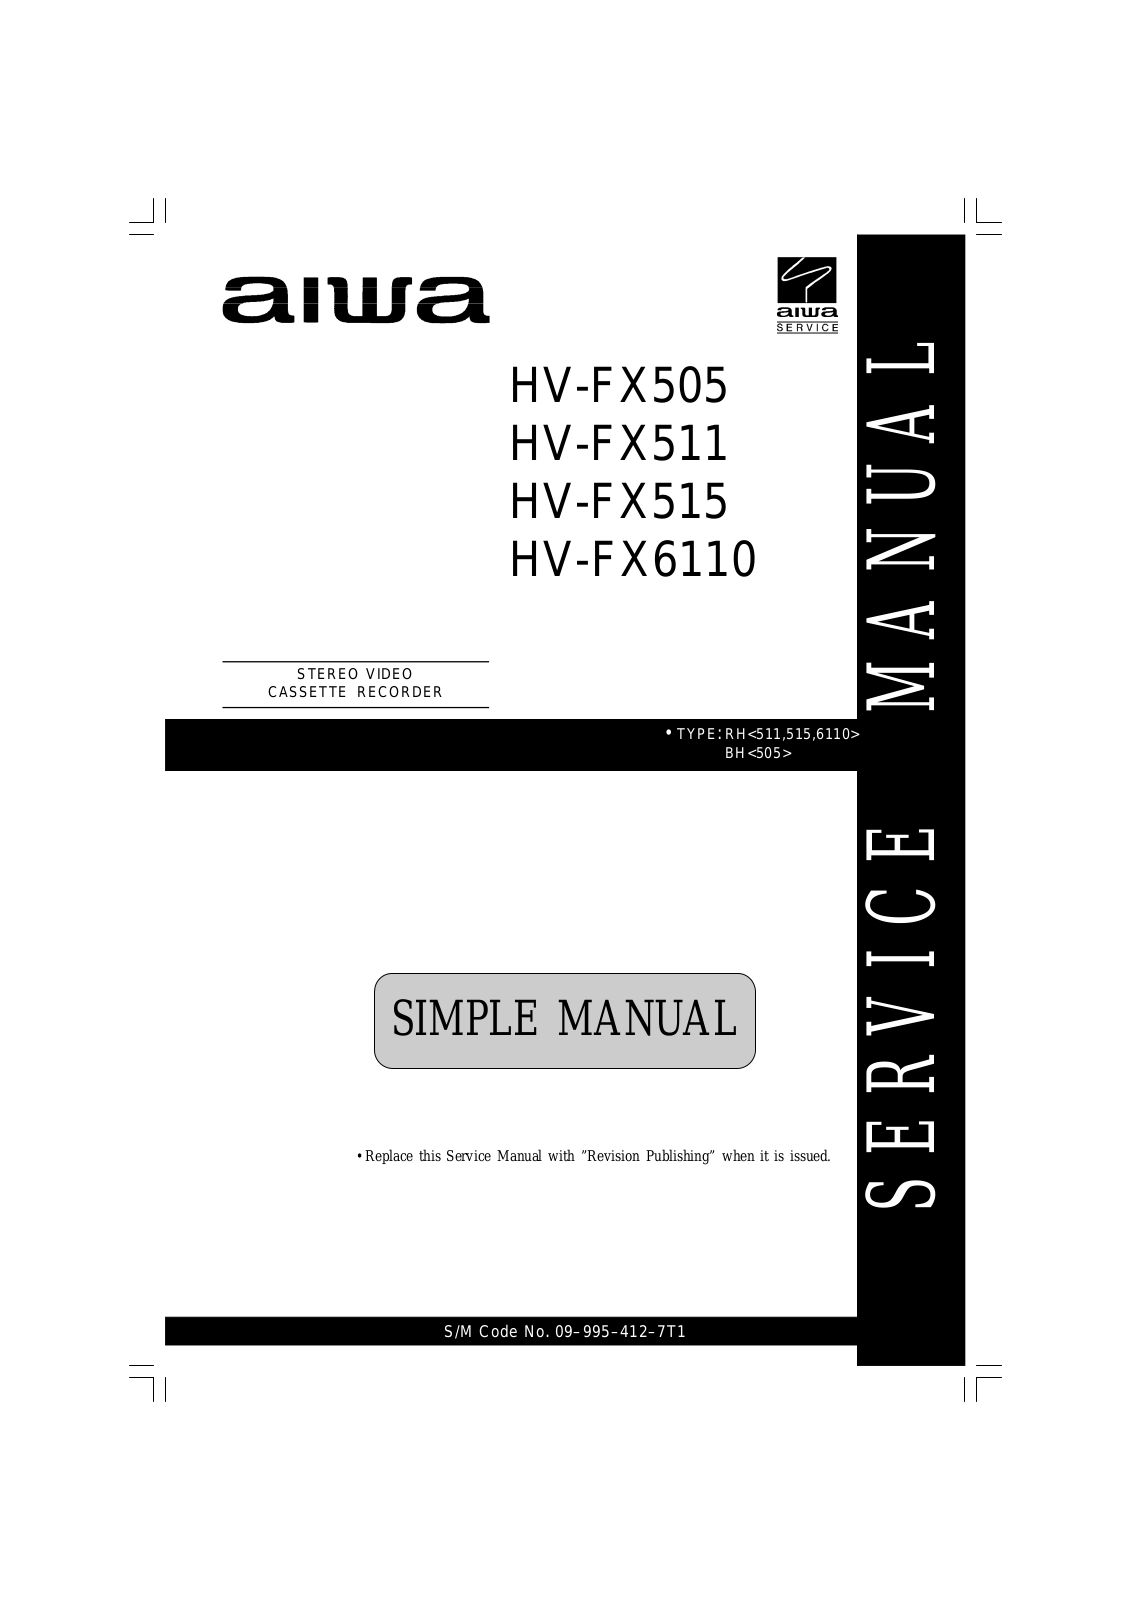 Aiwa HV-FX505 Service Manual